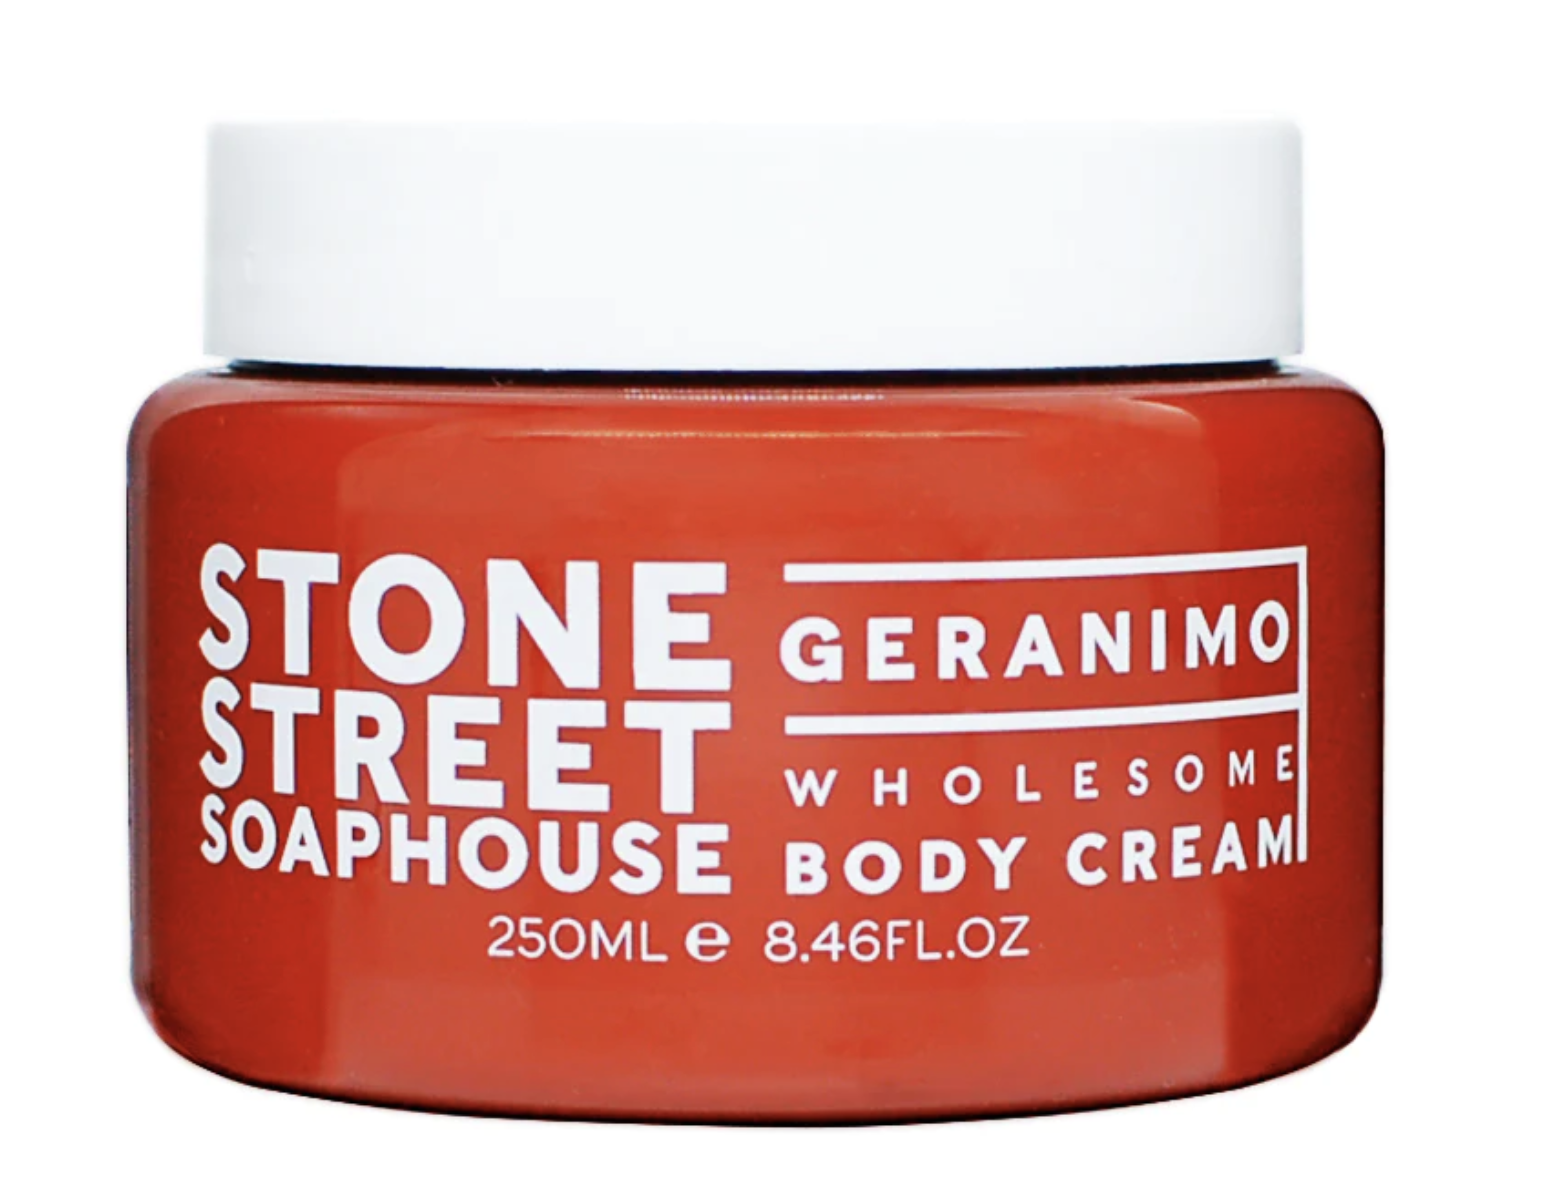 Stone Street soap House Geranimo body cream